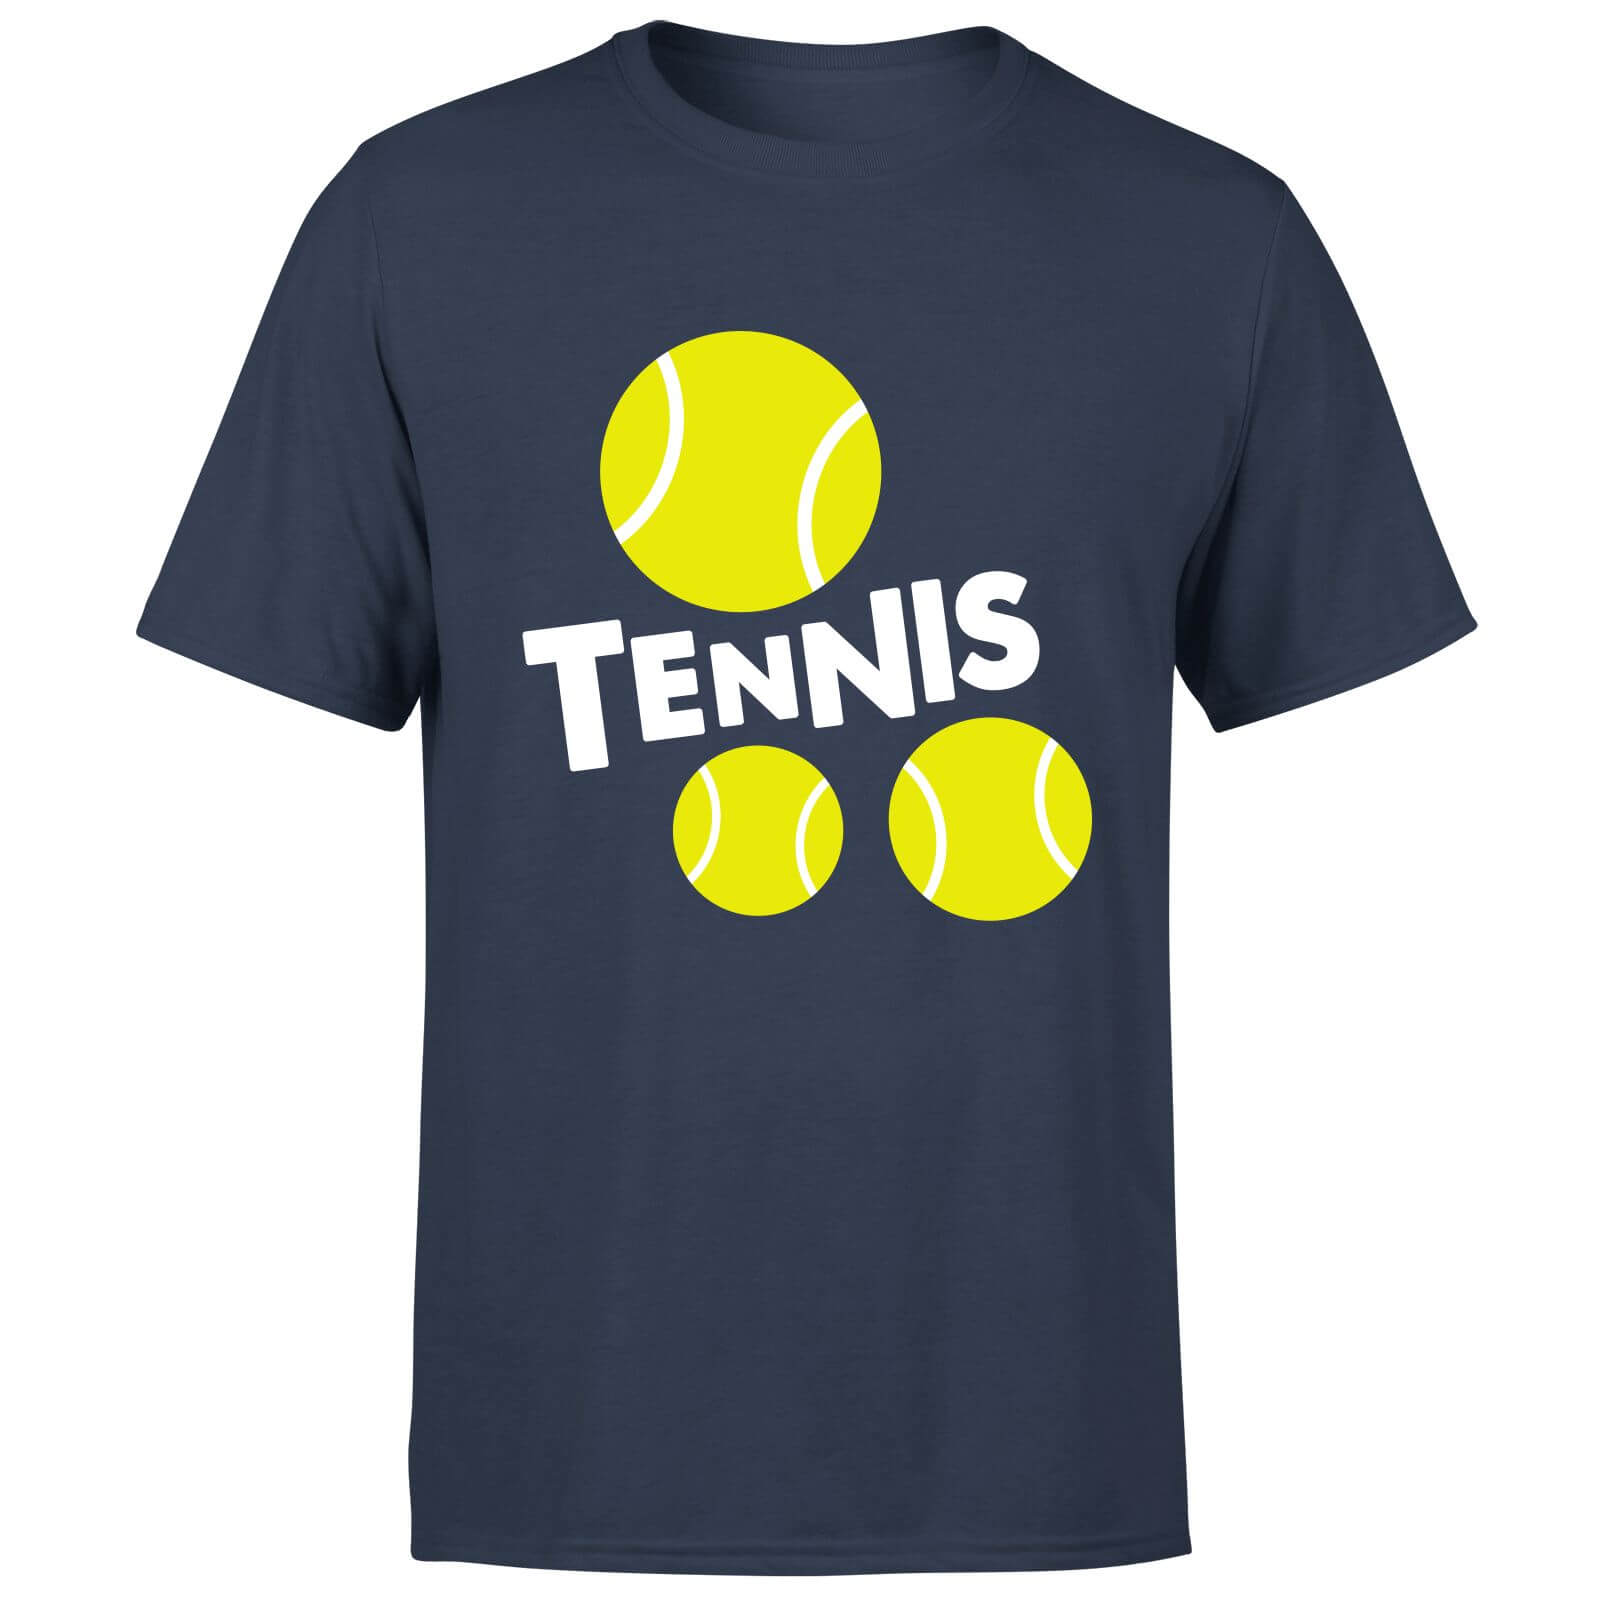 Tennis Balls T Shirt   Navy   M   Navy